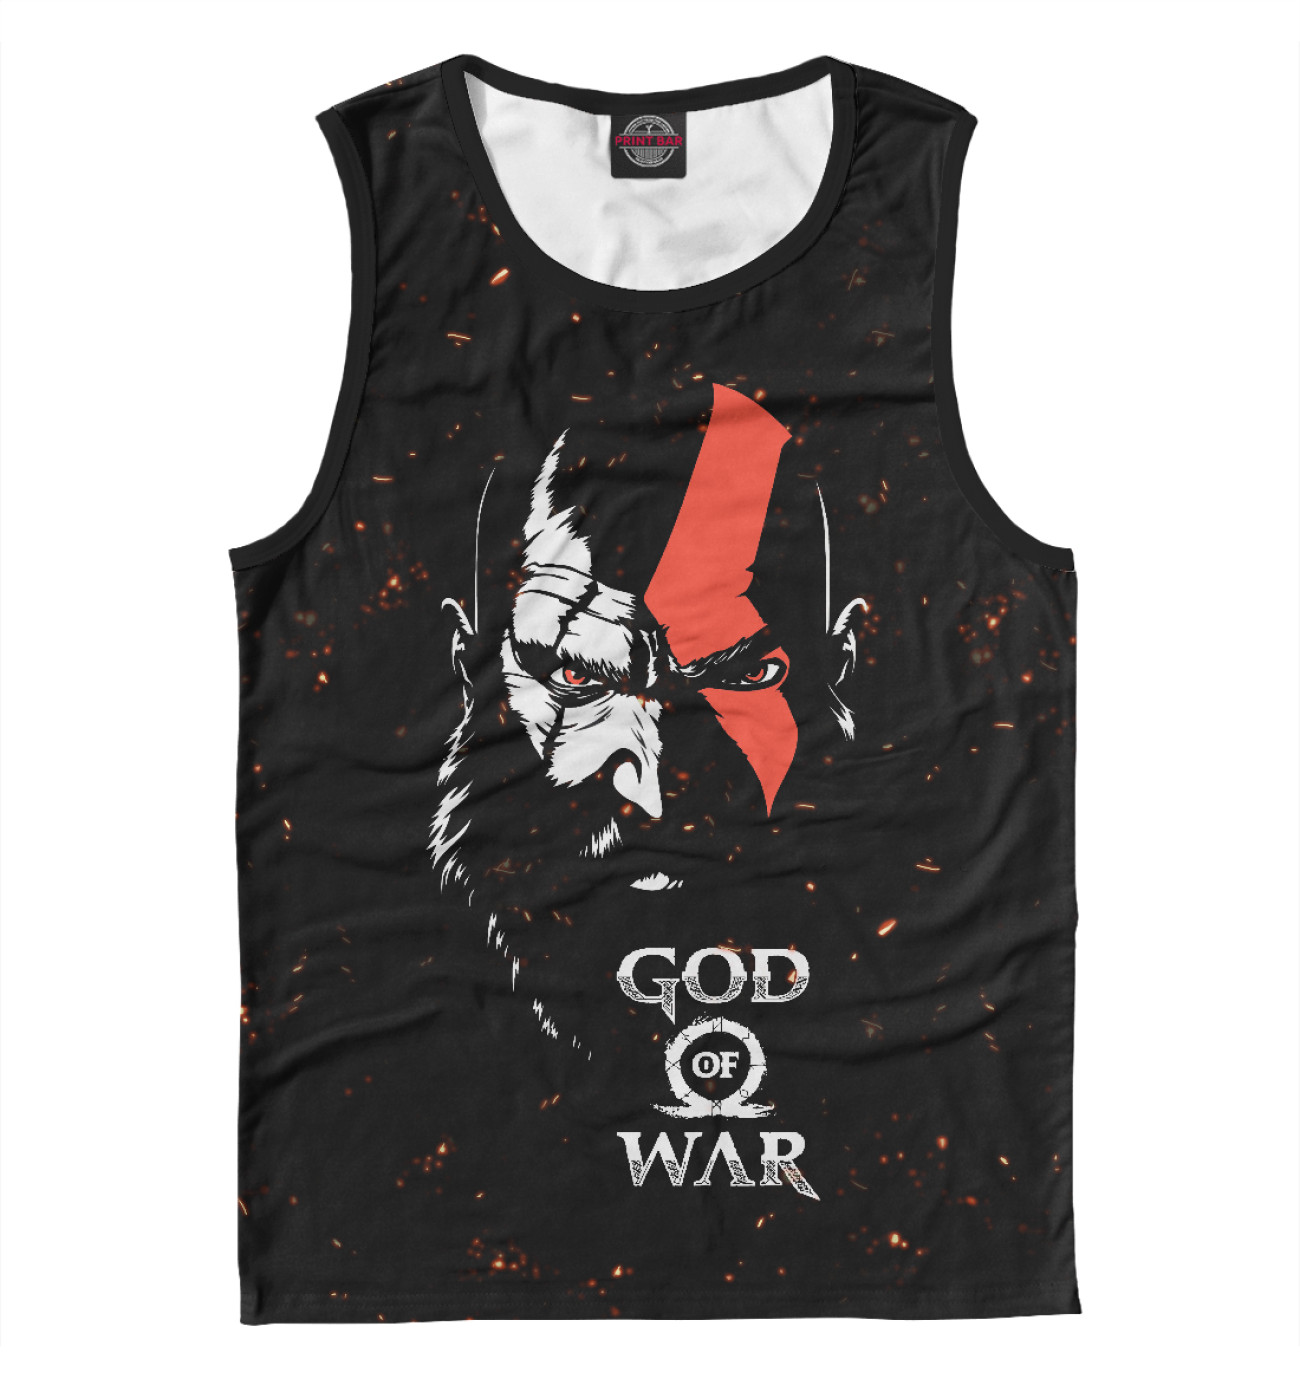 Мужская Майка God of War, артикул: GOW-675793-may-2